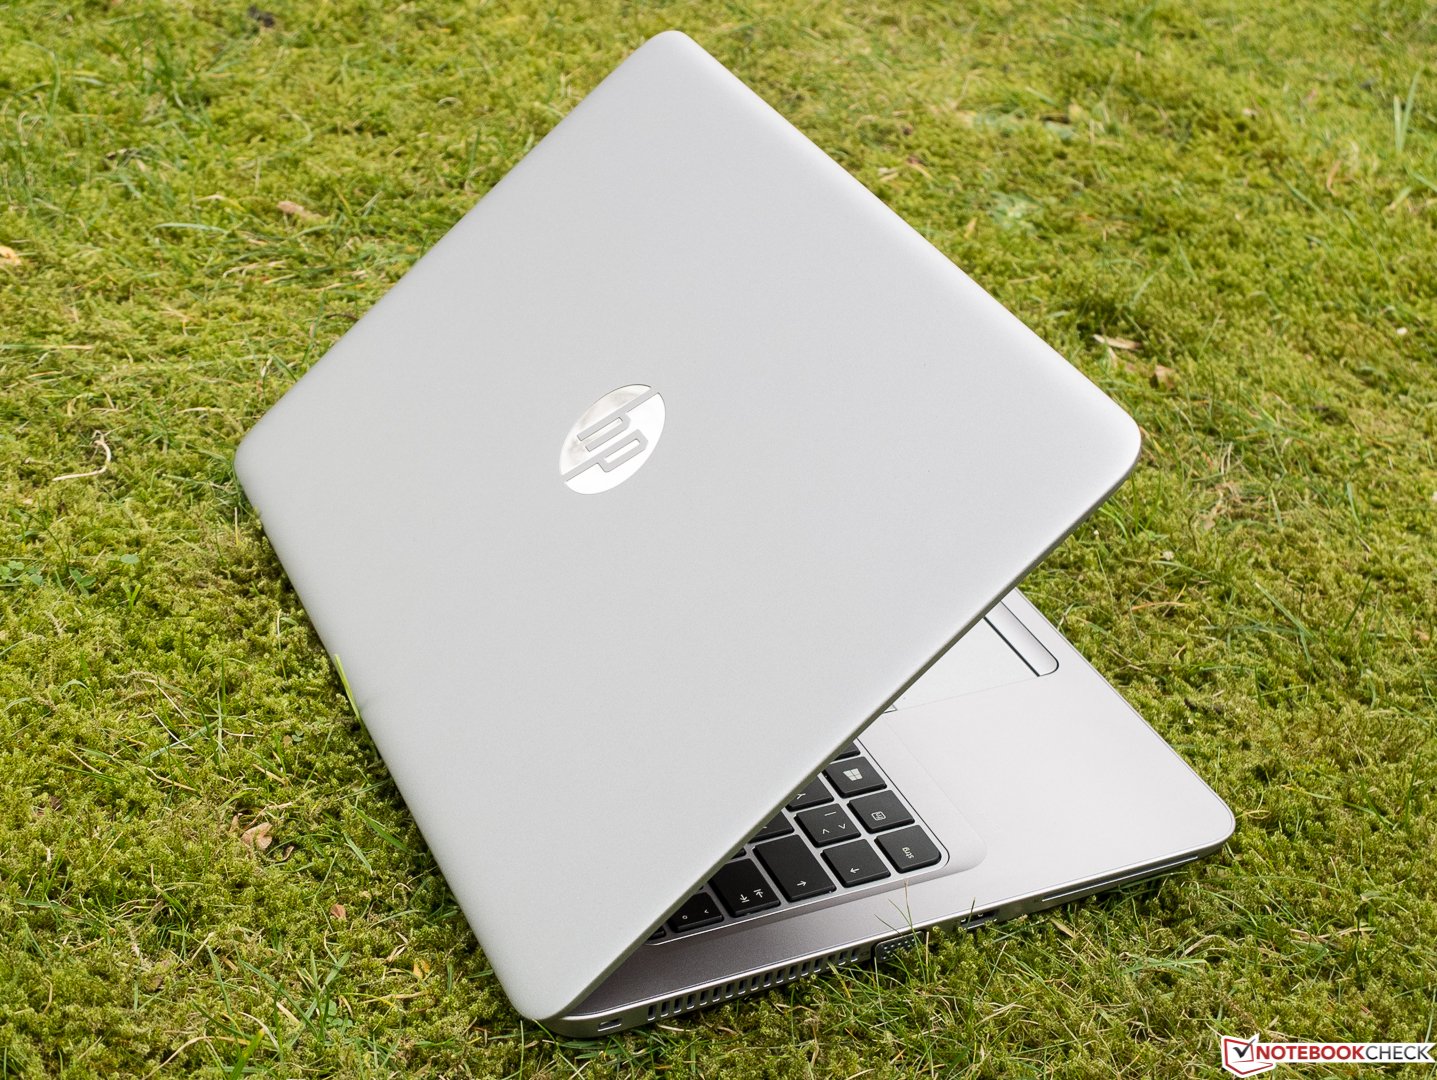 HP EliteBook 840 G3 - Test et avis - SesamePC